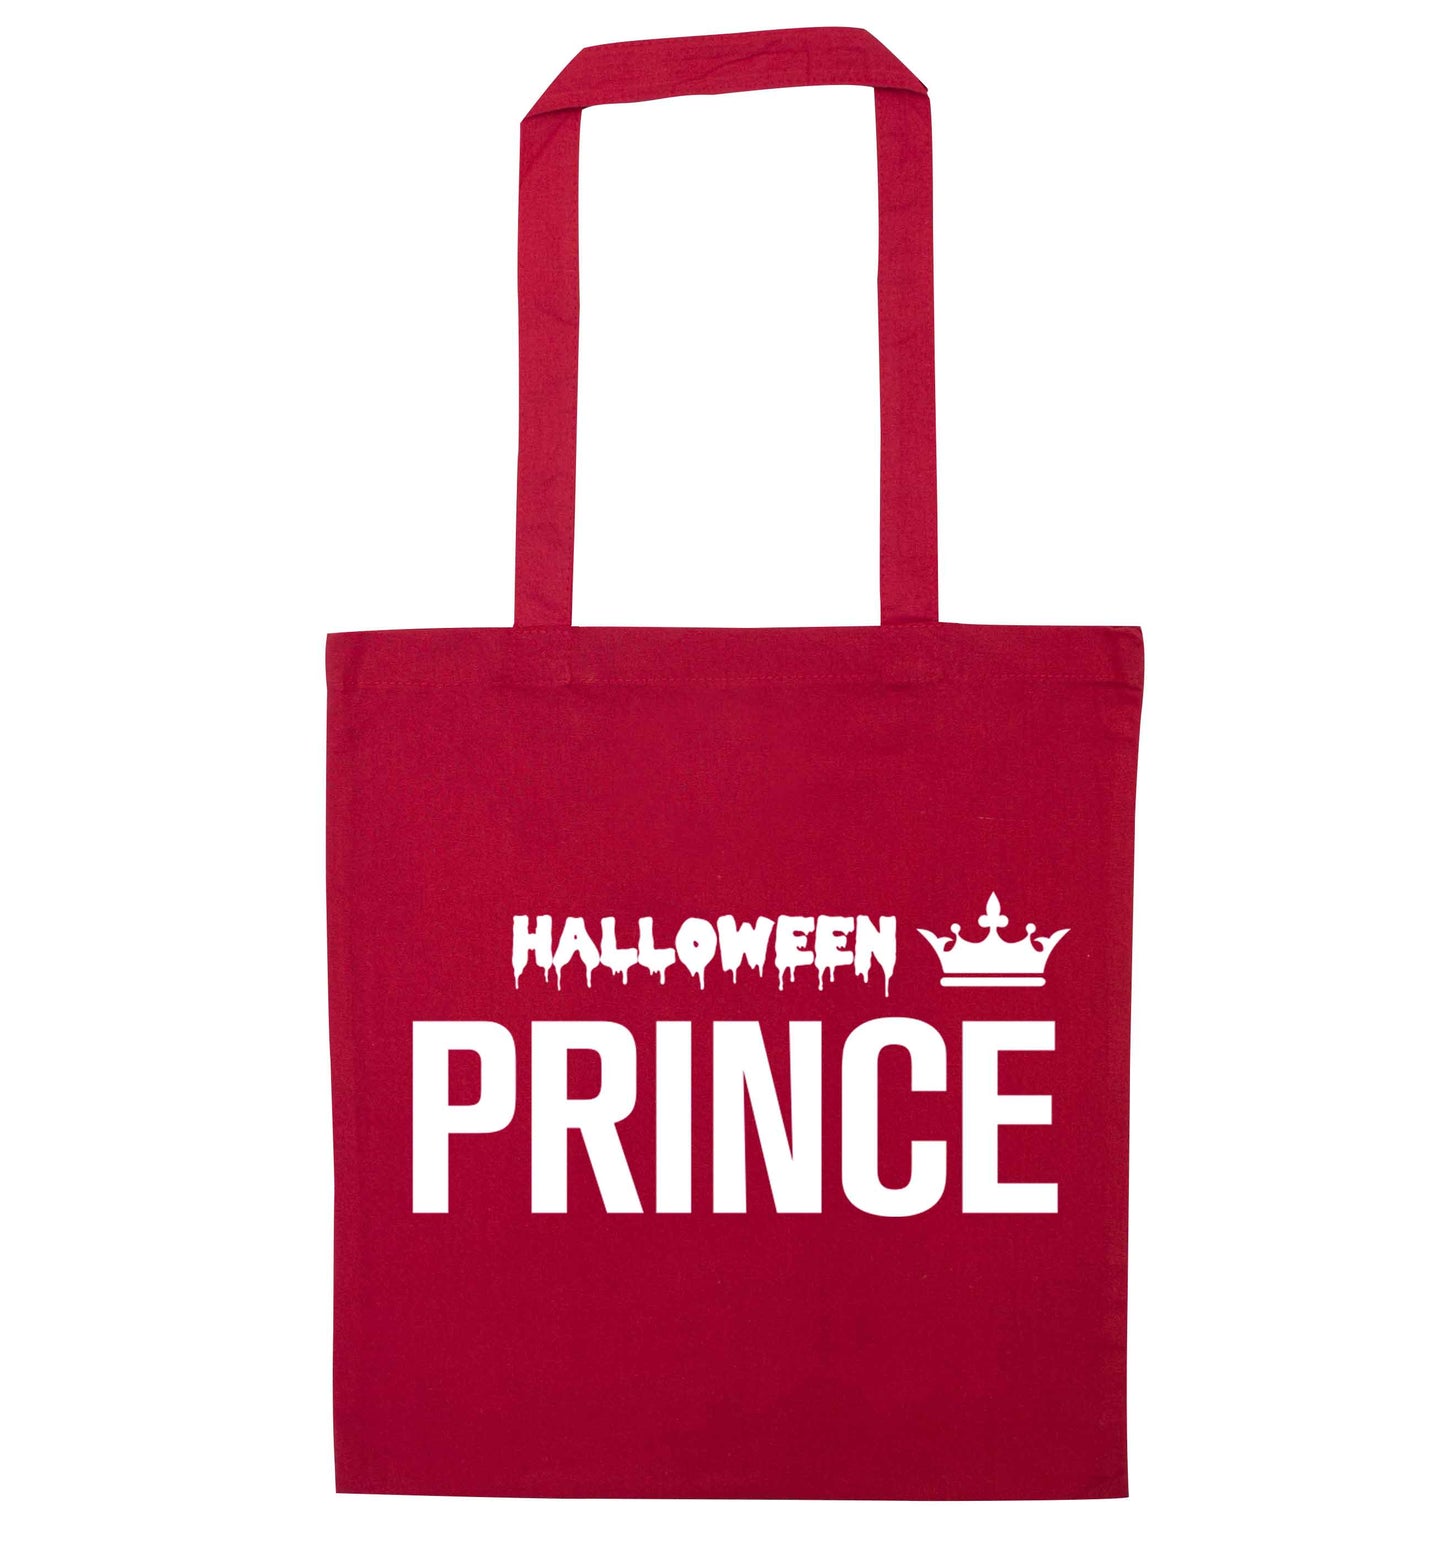 Halloween prince red tote bag